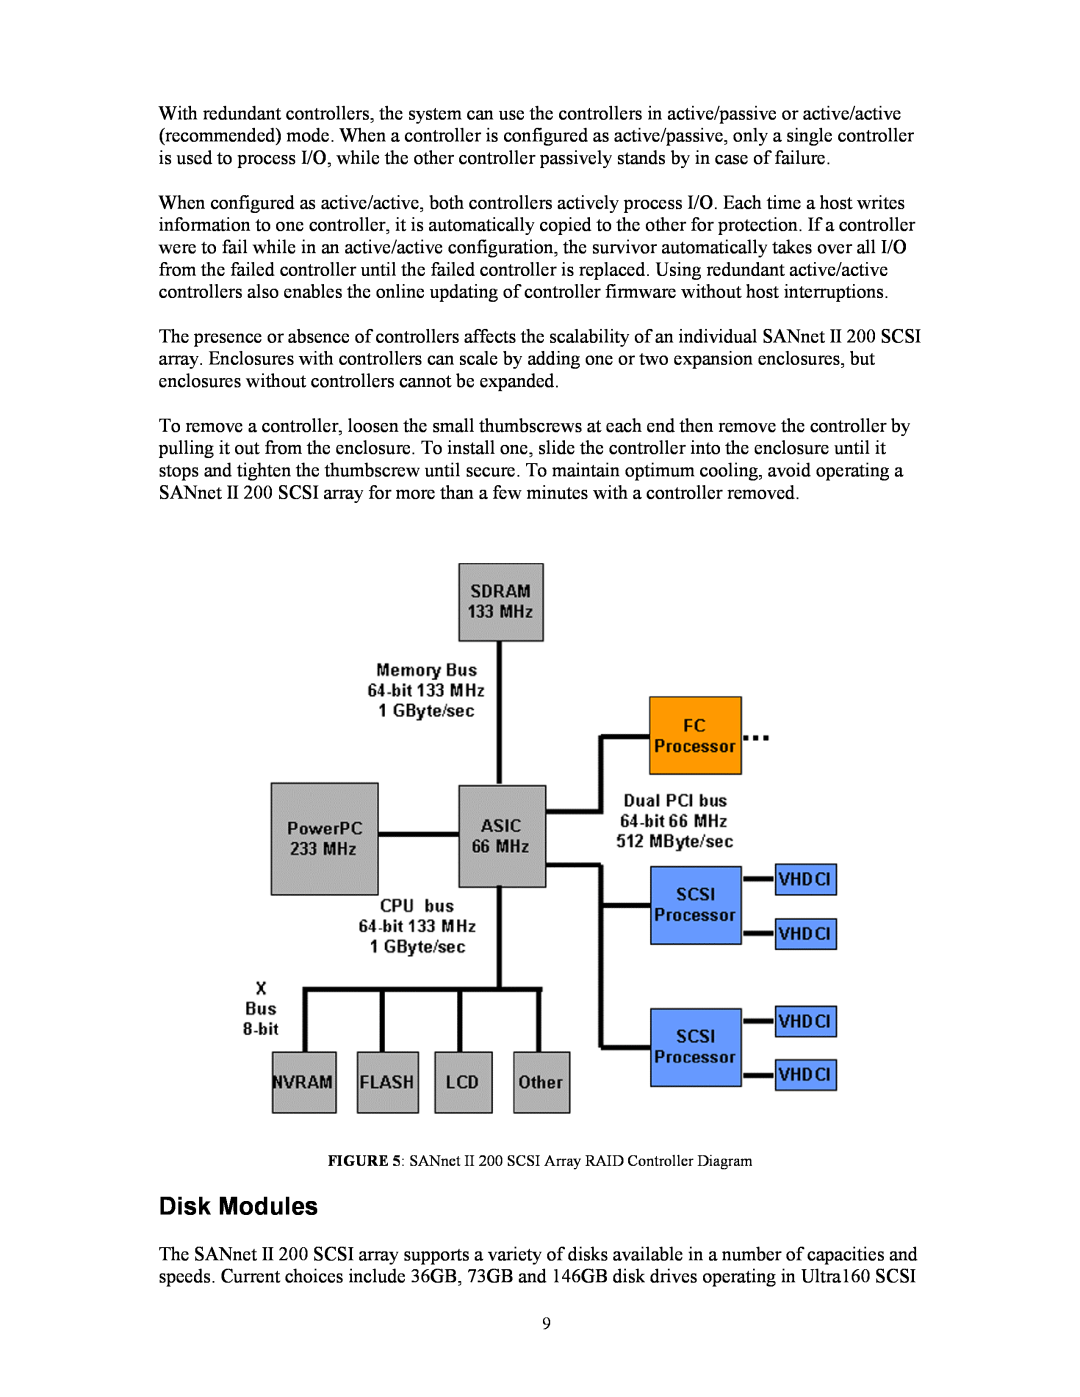 Dot Hill Systems manual Disk Modules, SANnet II 200 SCSI Array RAID Controller Diagram 